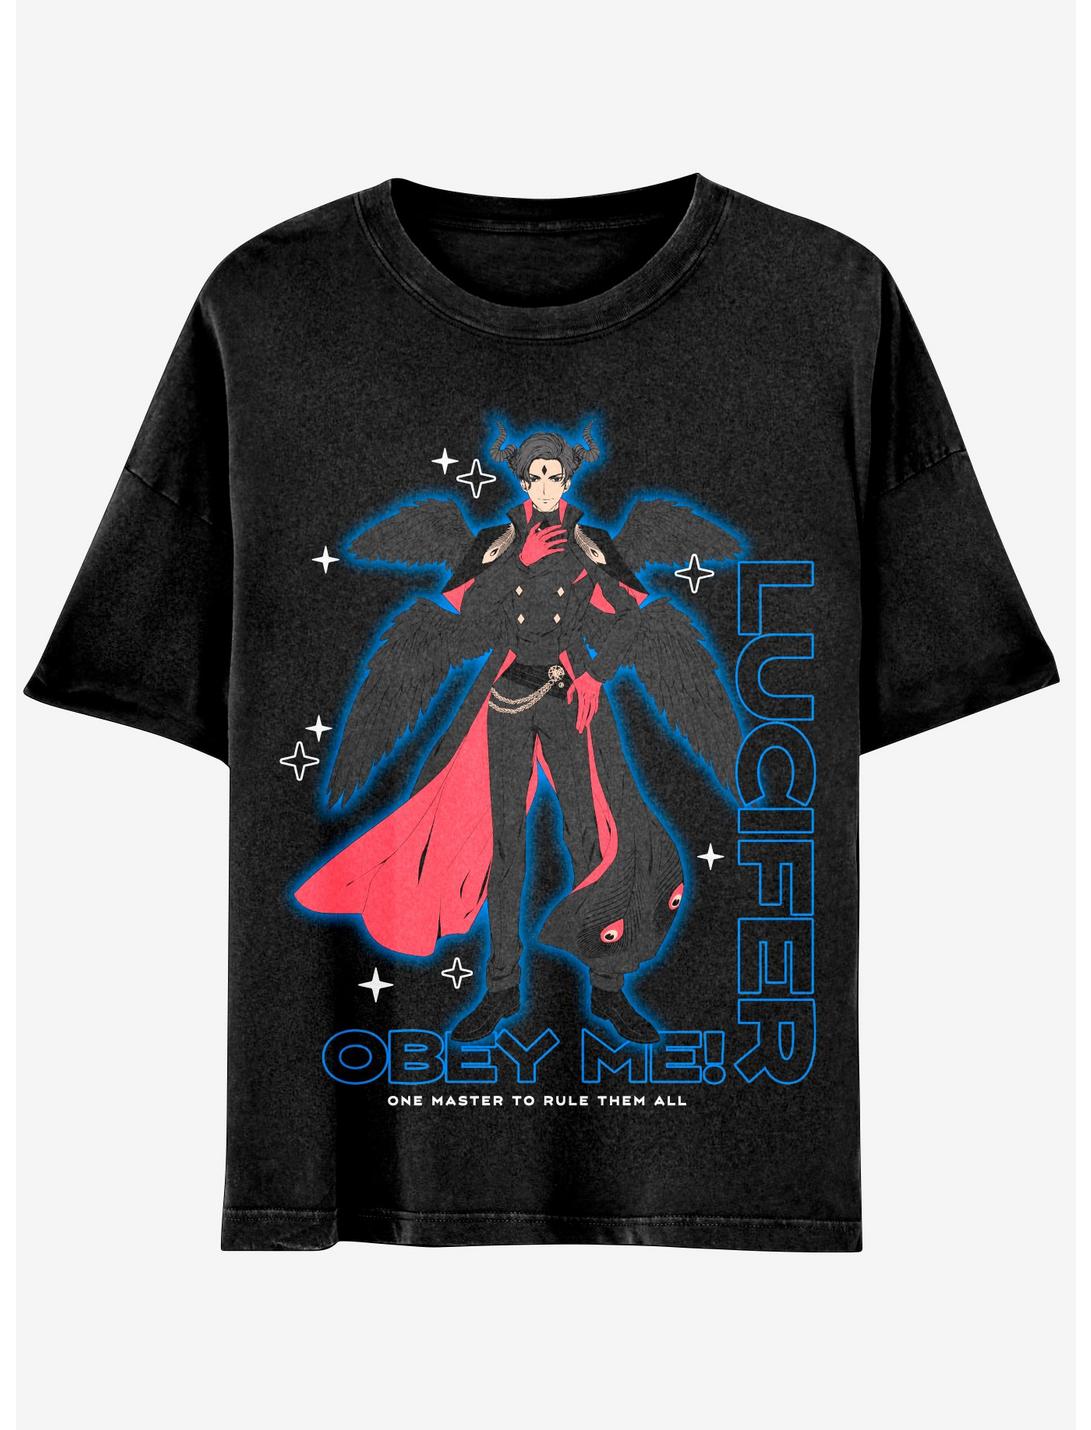 Obey Me! Lucifer Boyfriend Fit Girls T-Shirt, MULTI, hi-res